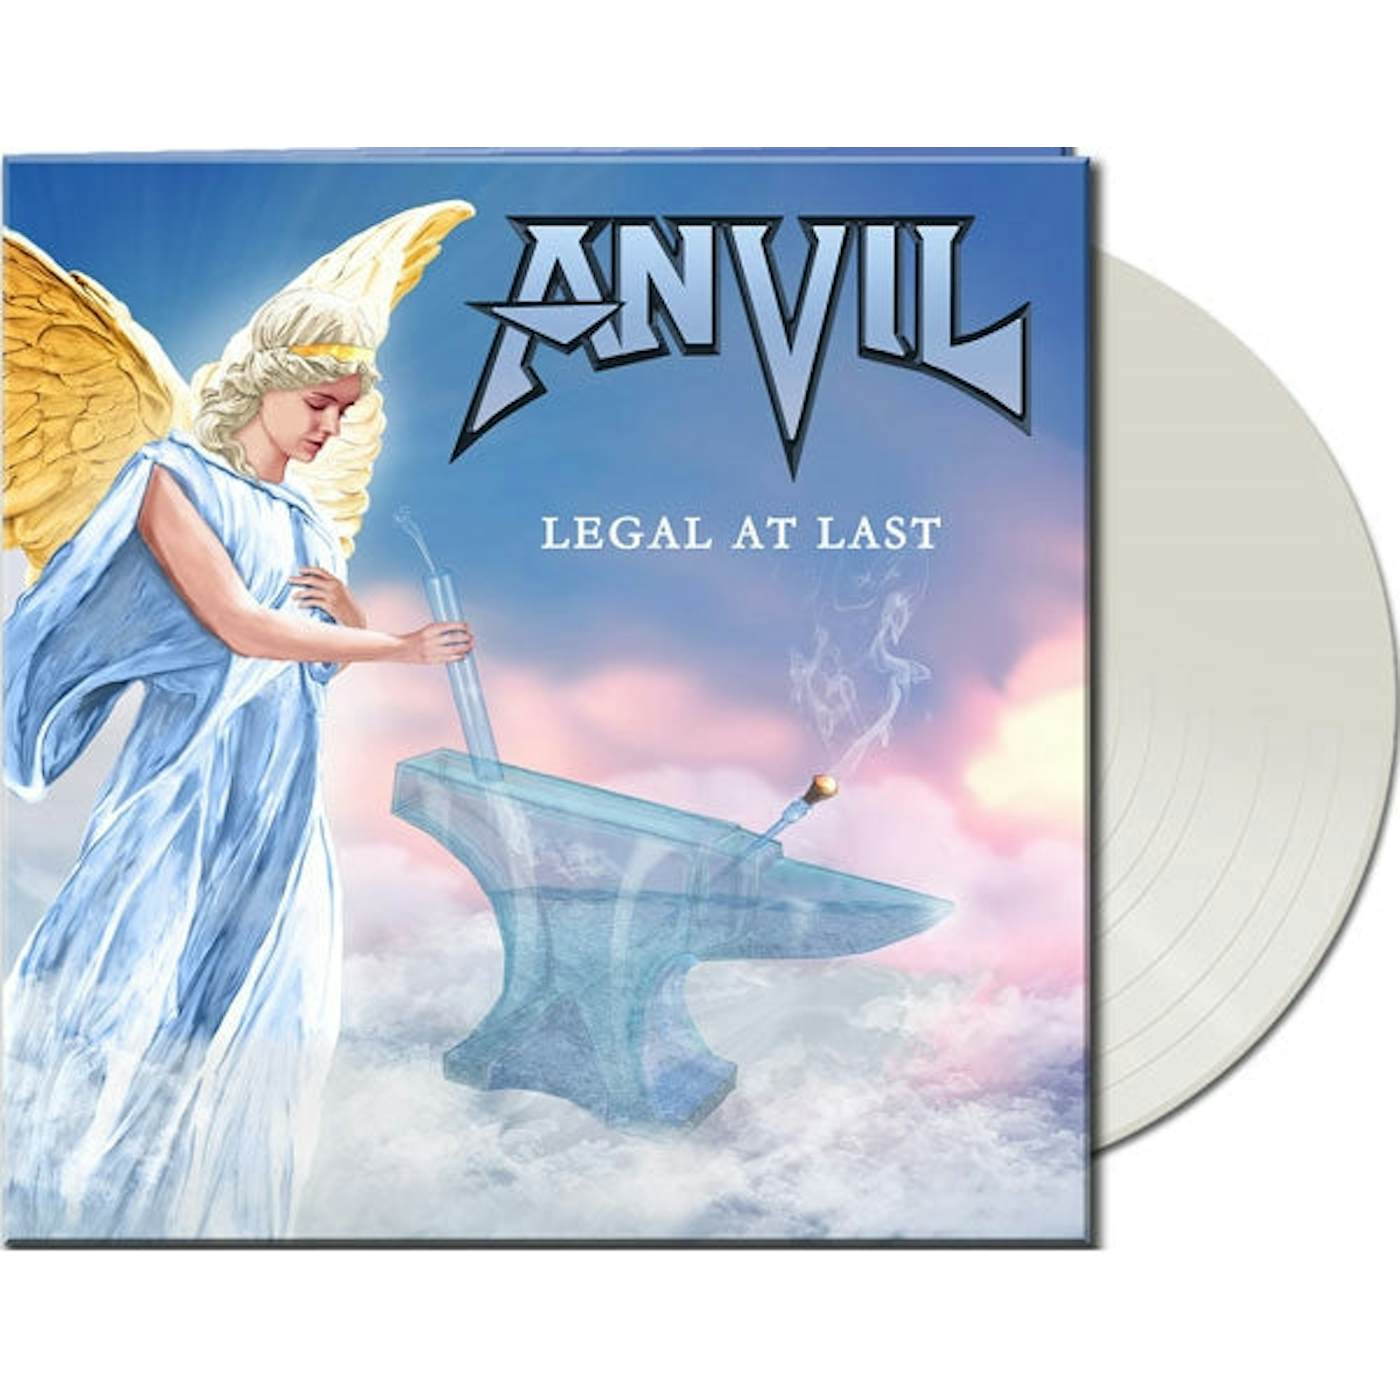 Anvil LP - Legal At Last (Clear Vinyl)